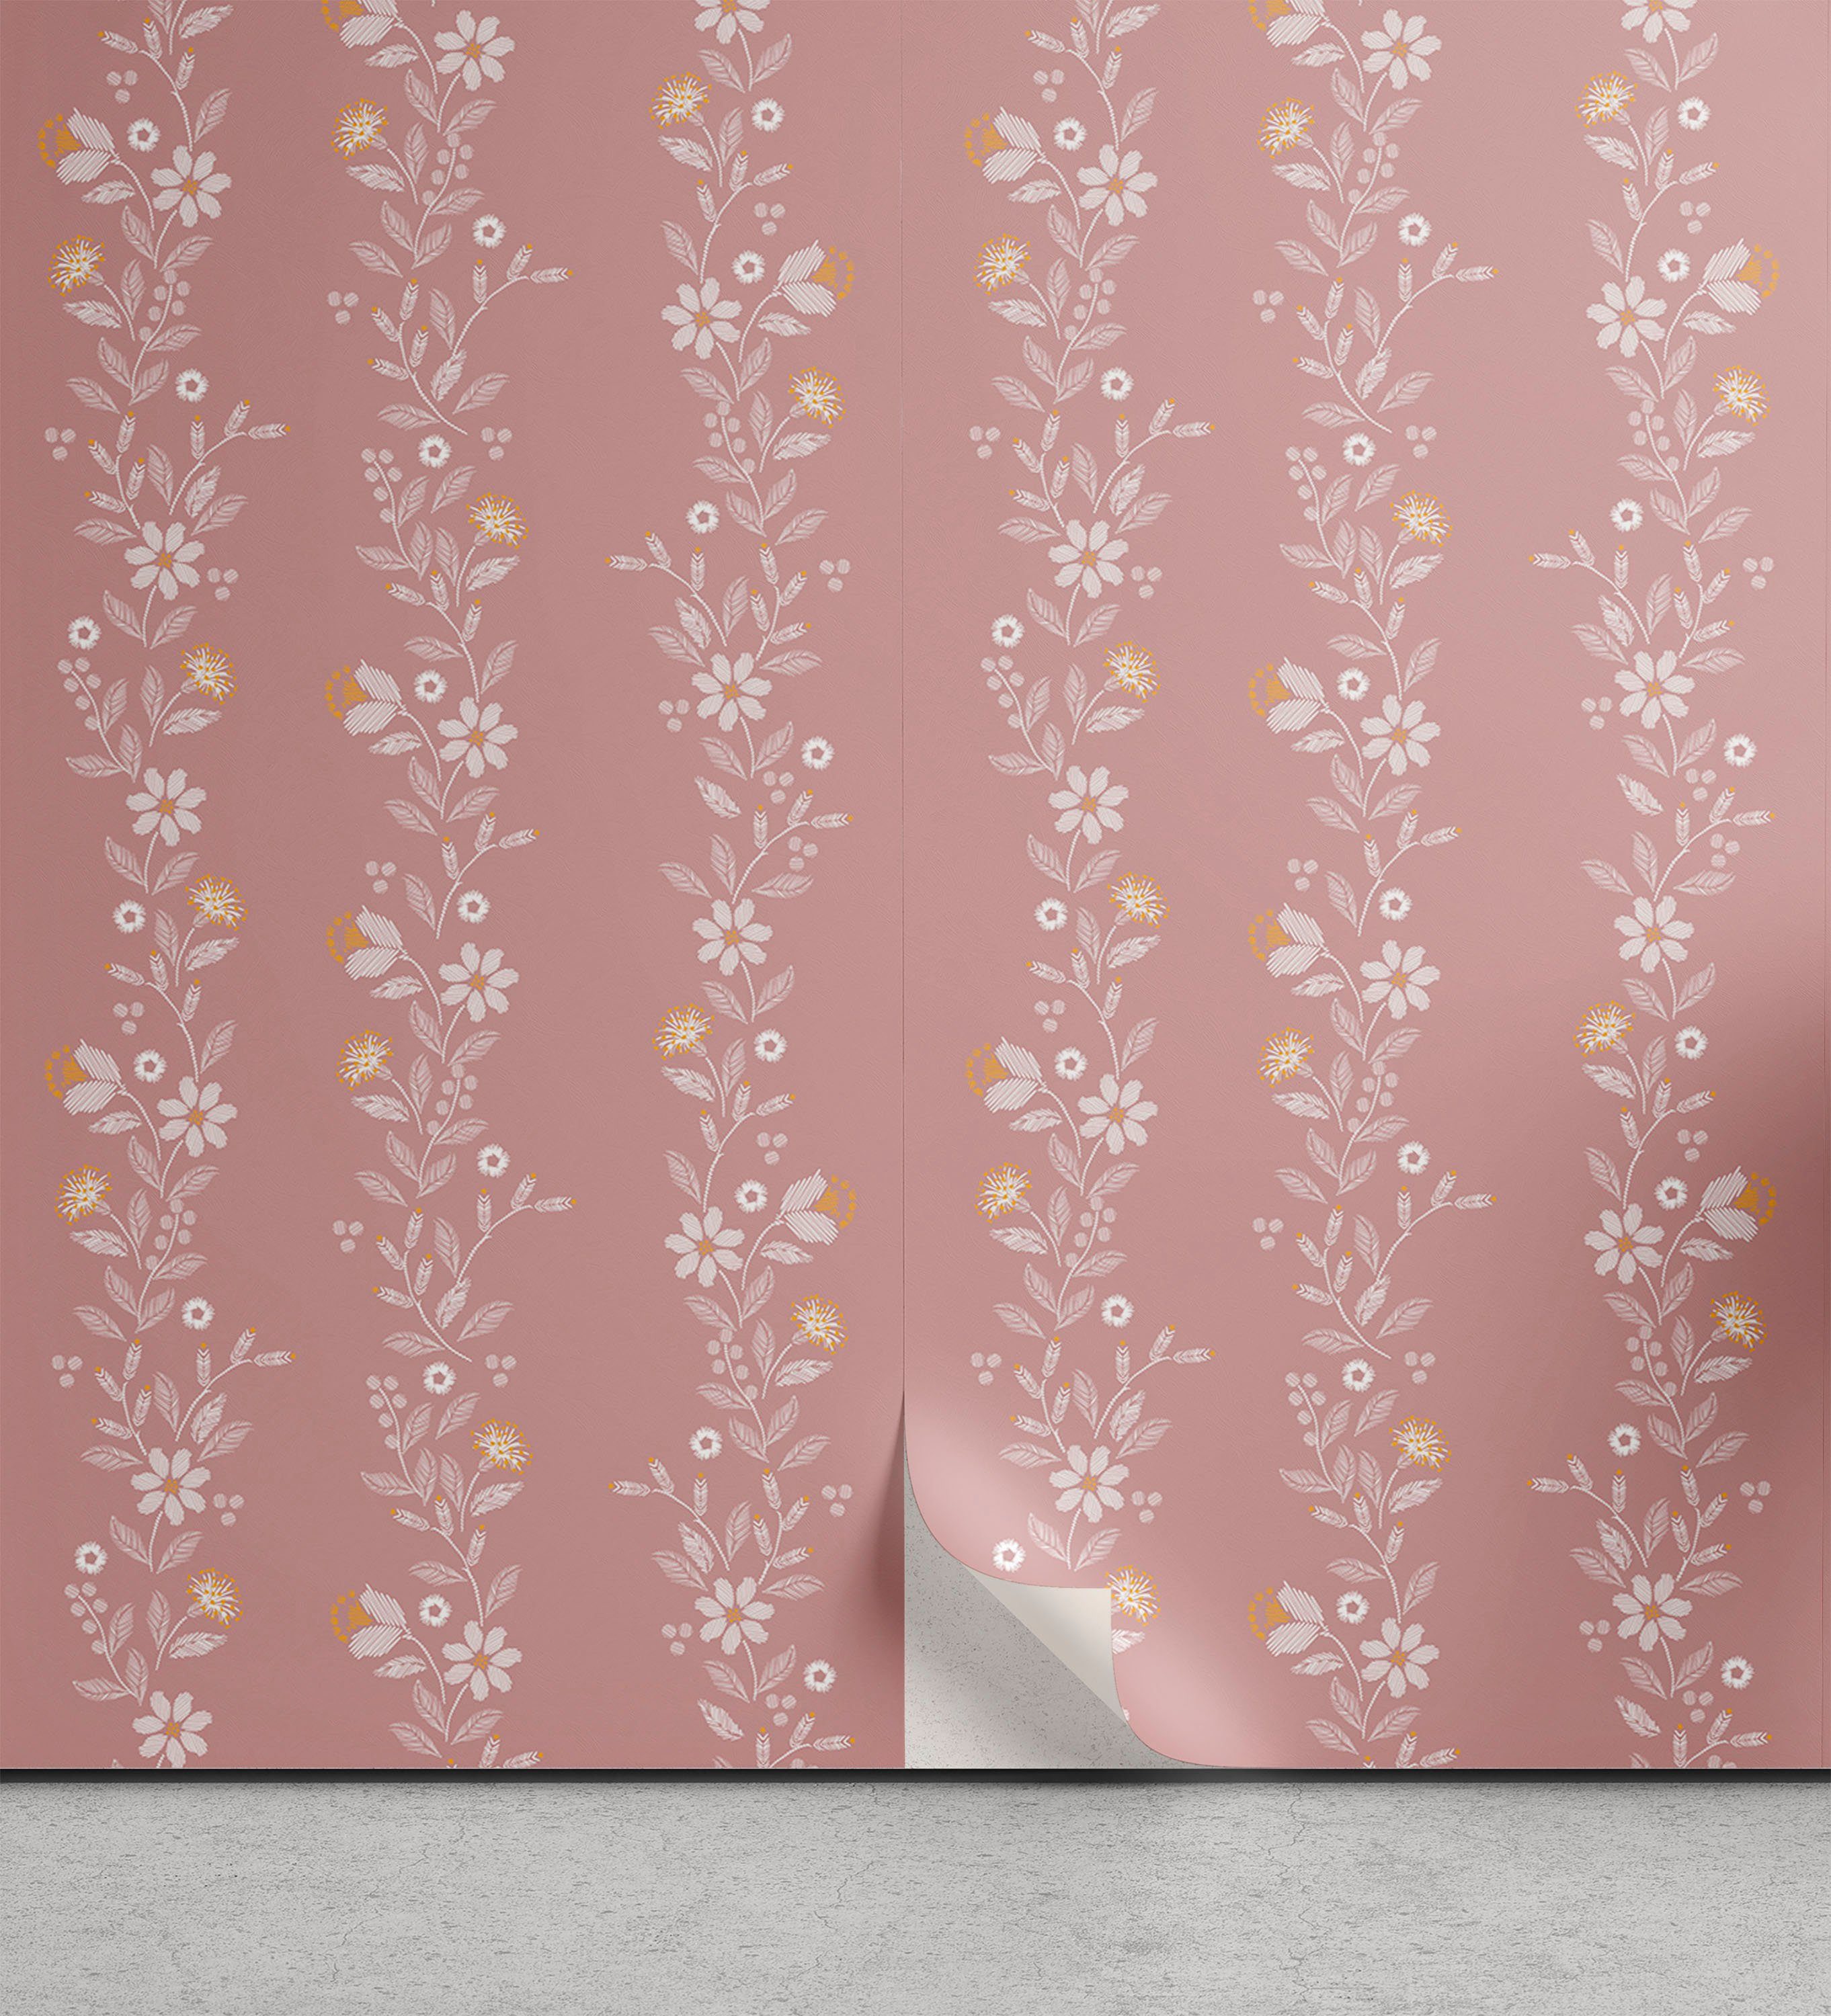 Wohnzimmer Farbe Abakuhaus selbstklebendes Retro Vinyltapete Floral Pastell neutrale Küchenakzent,